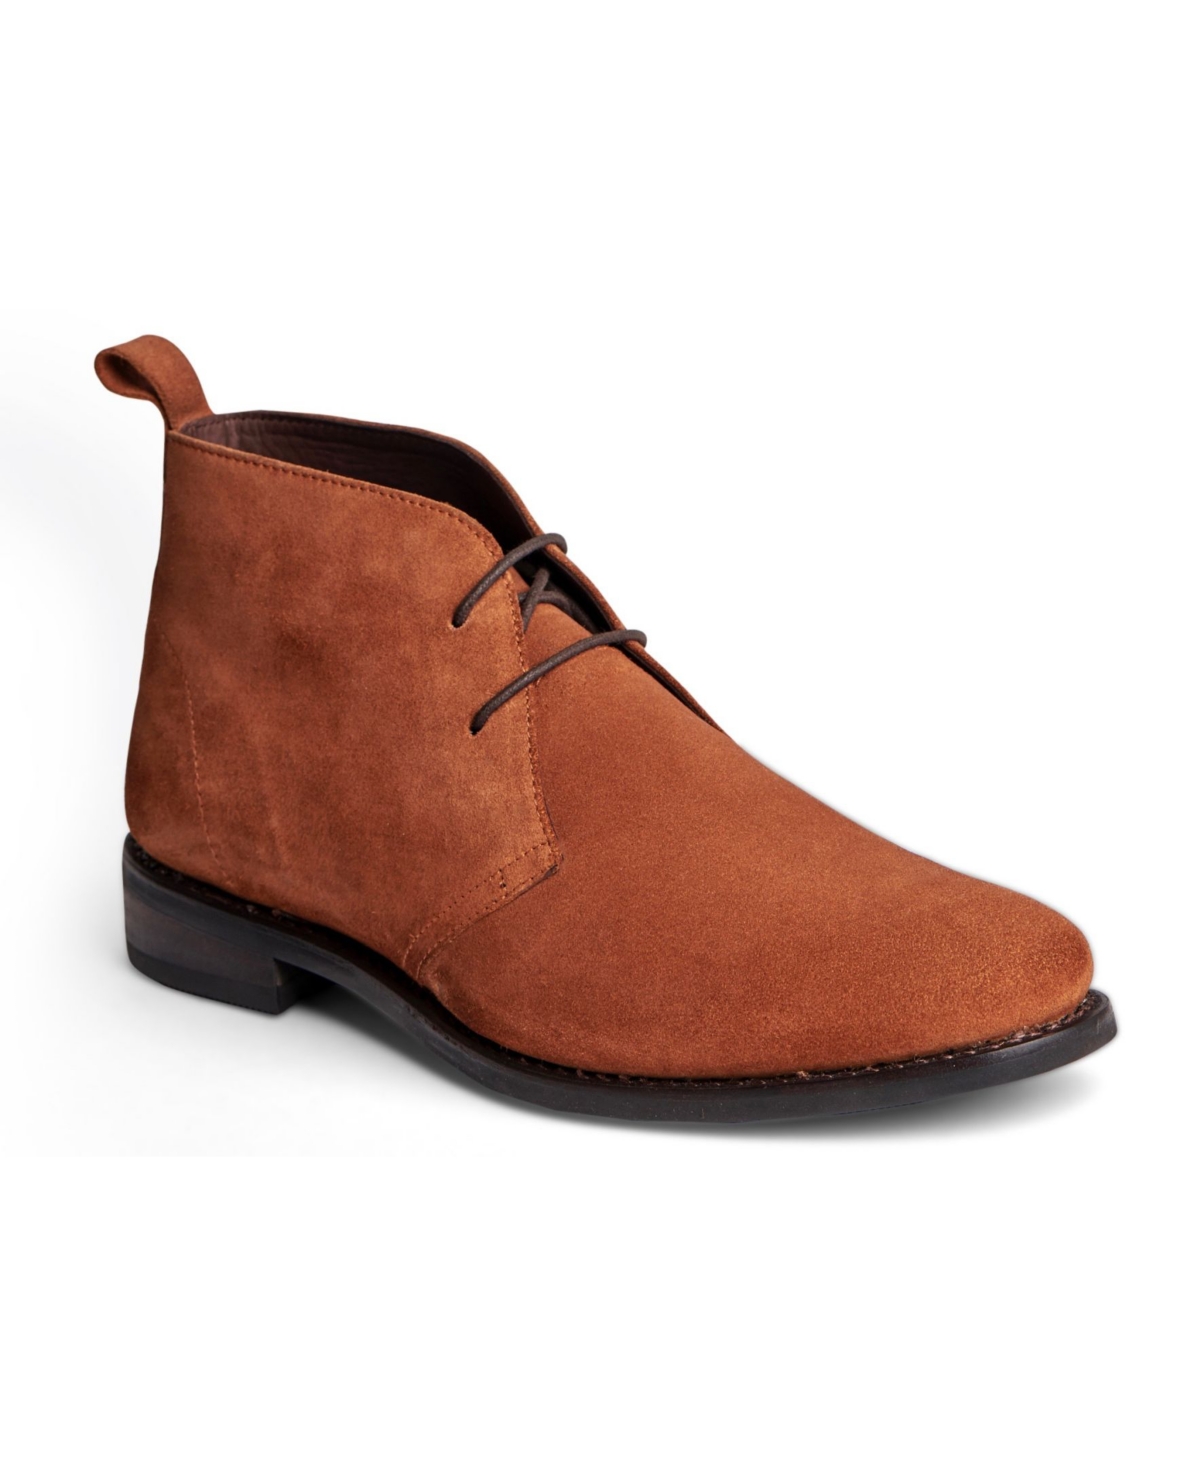 Men's Arthur Suede Leather Chukka Boots - Camel